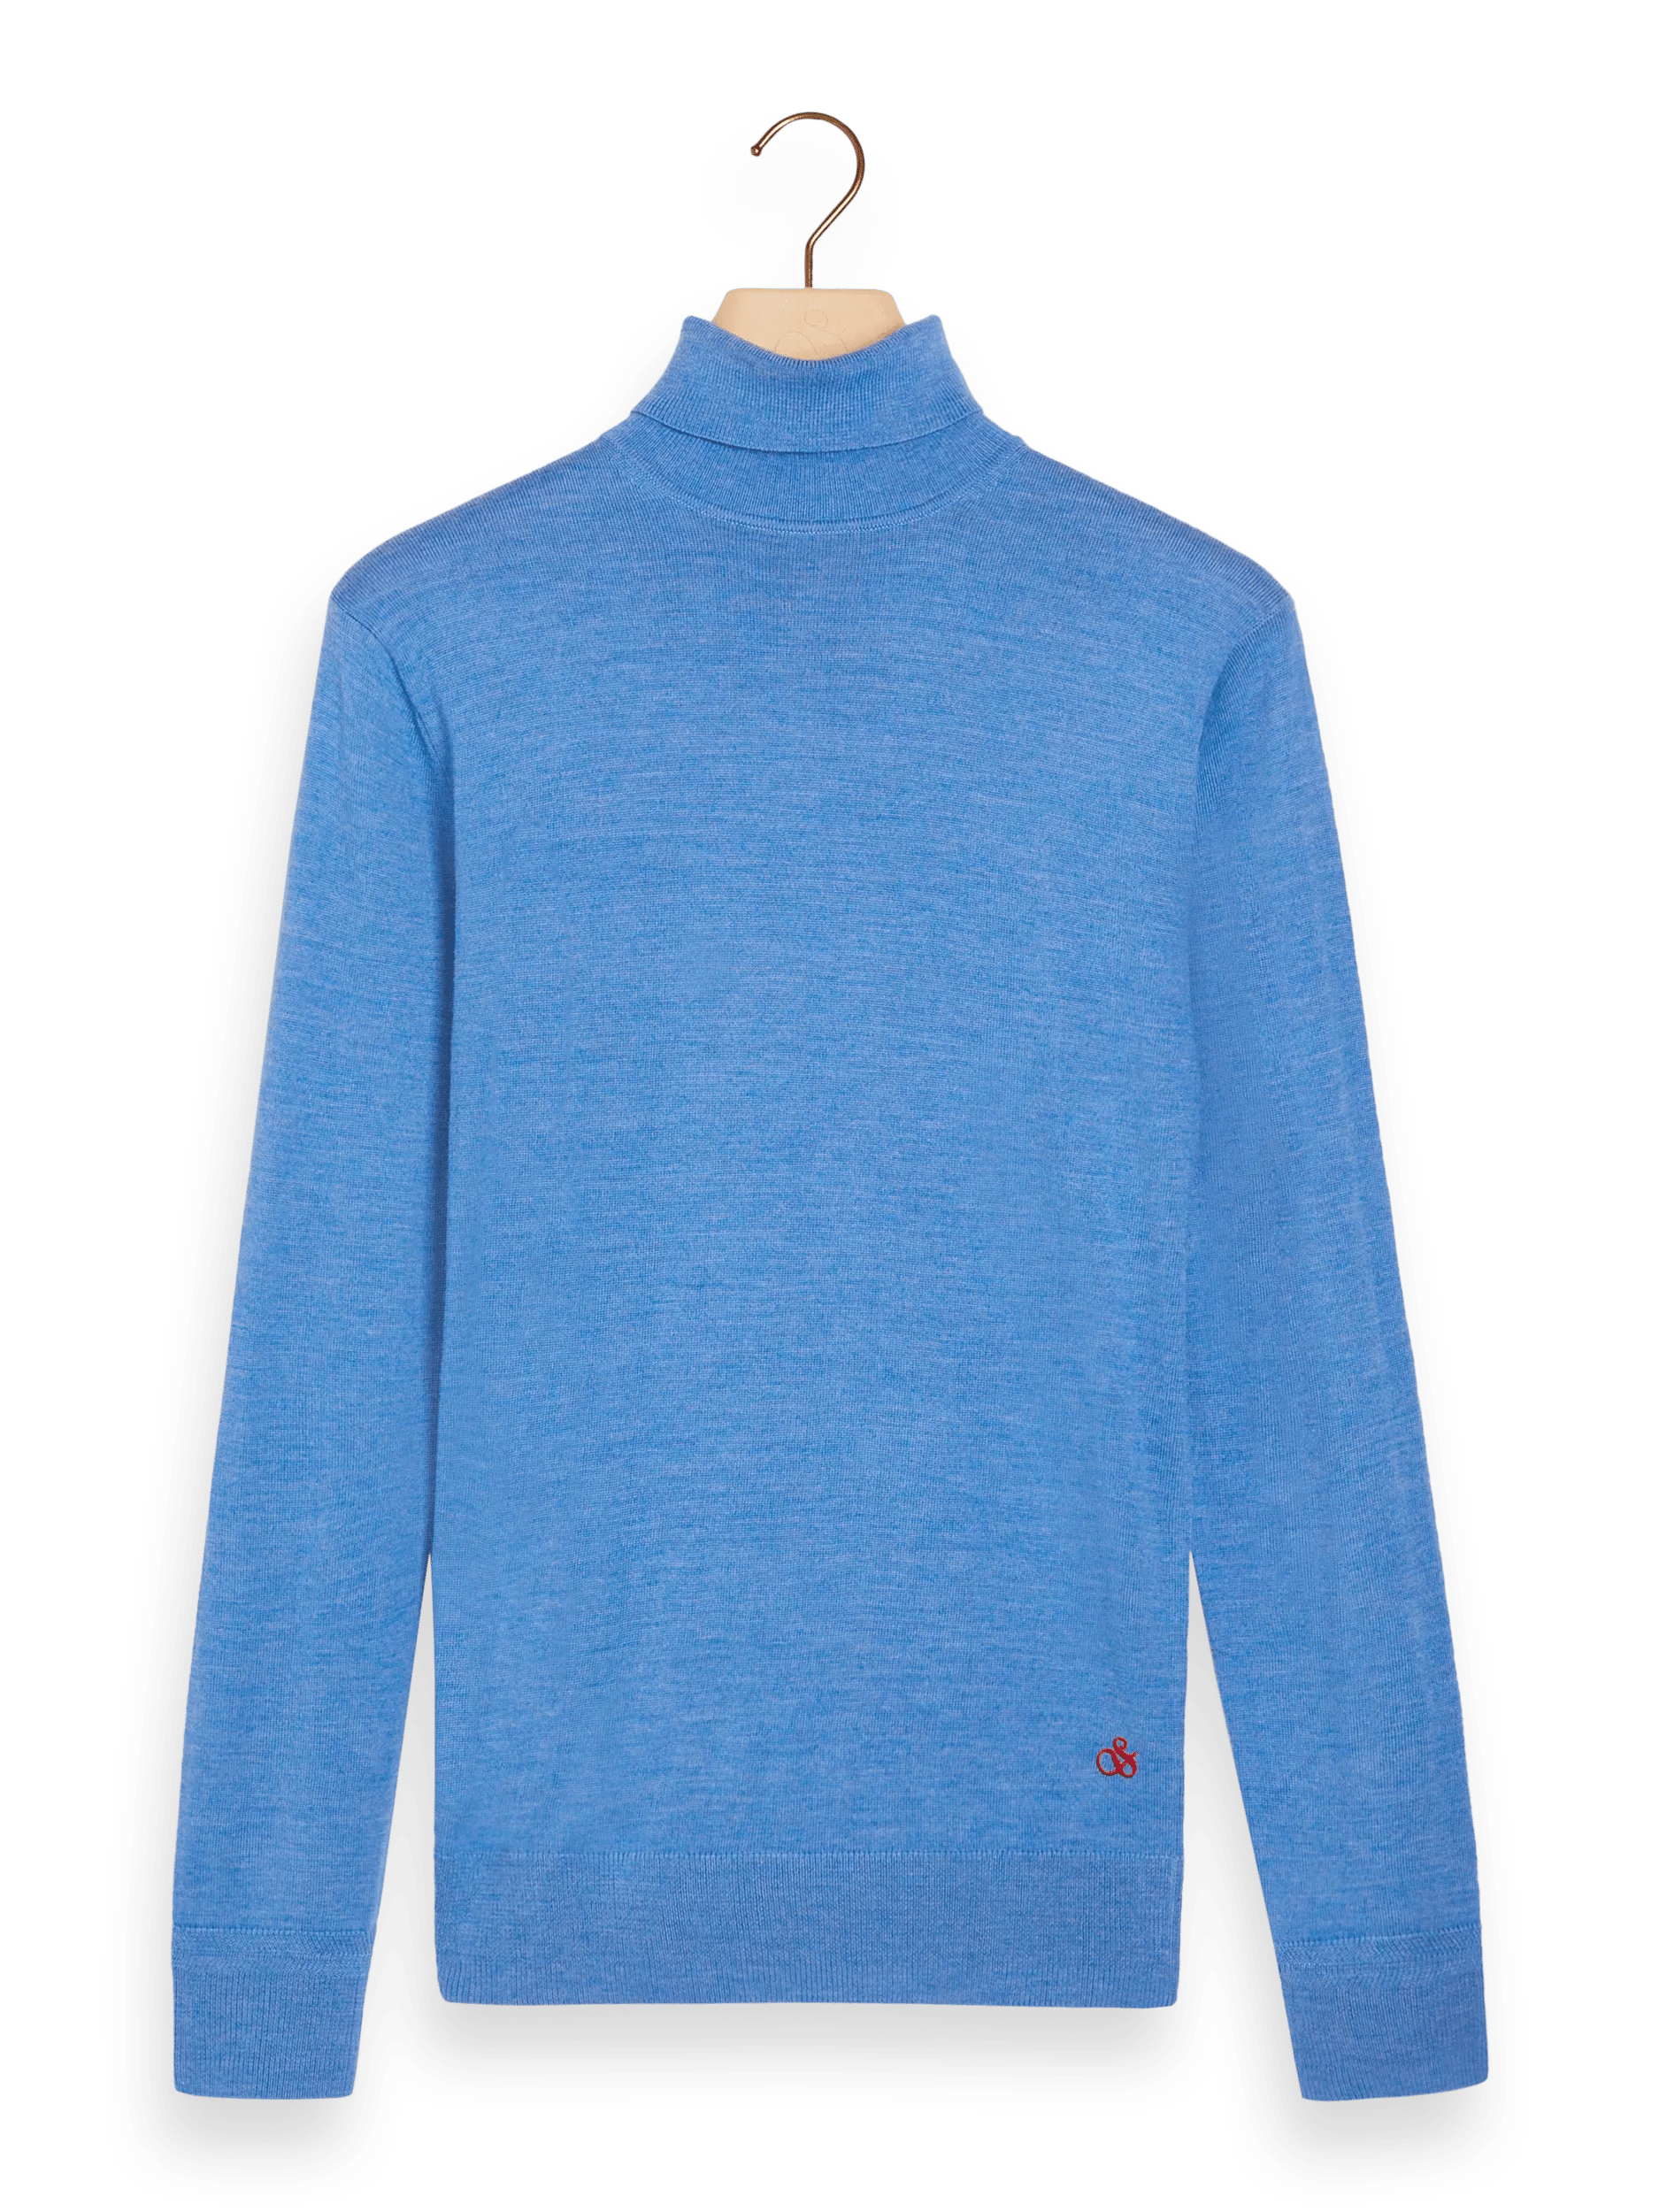 Merino wool turtleneck sweater